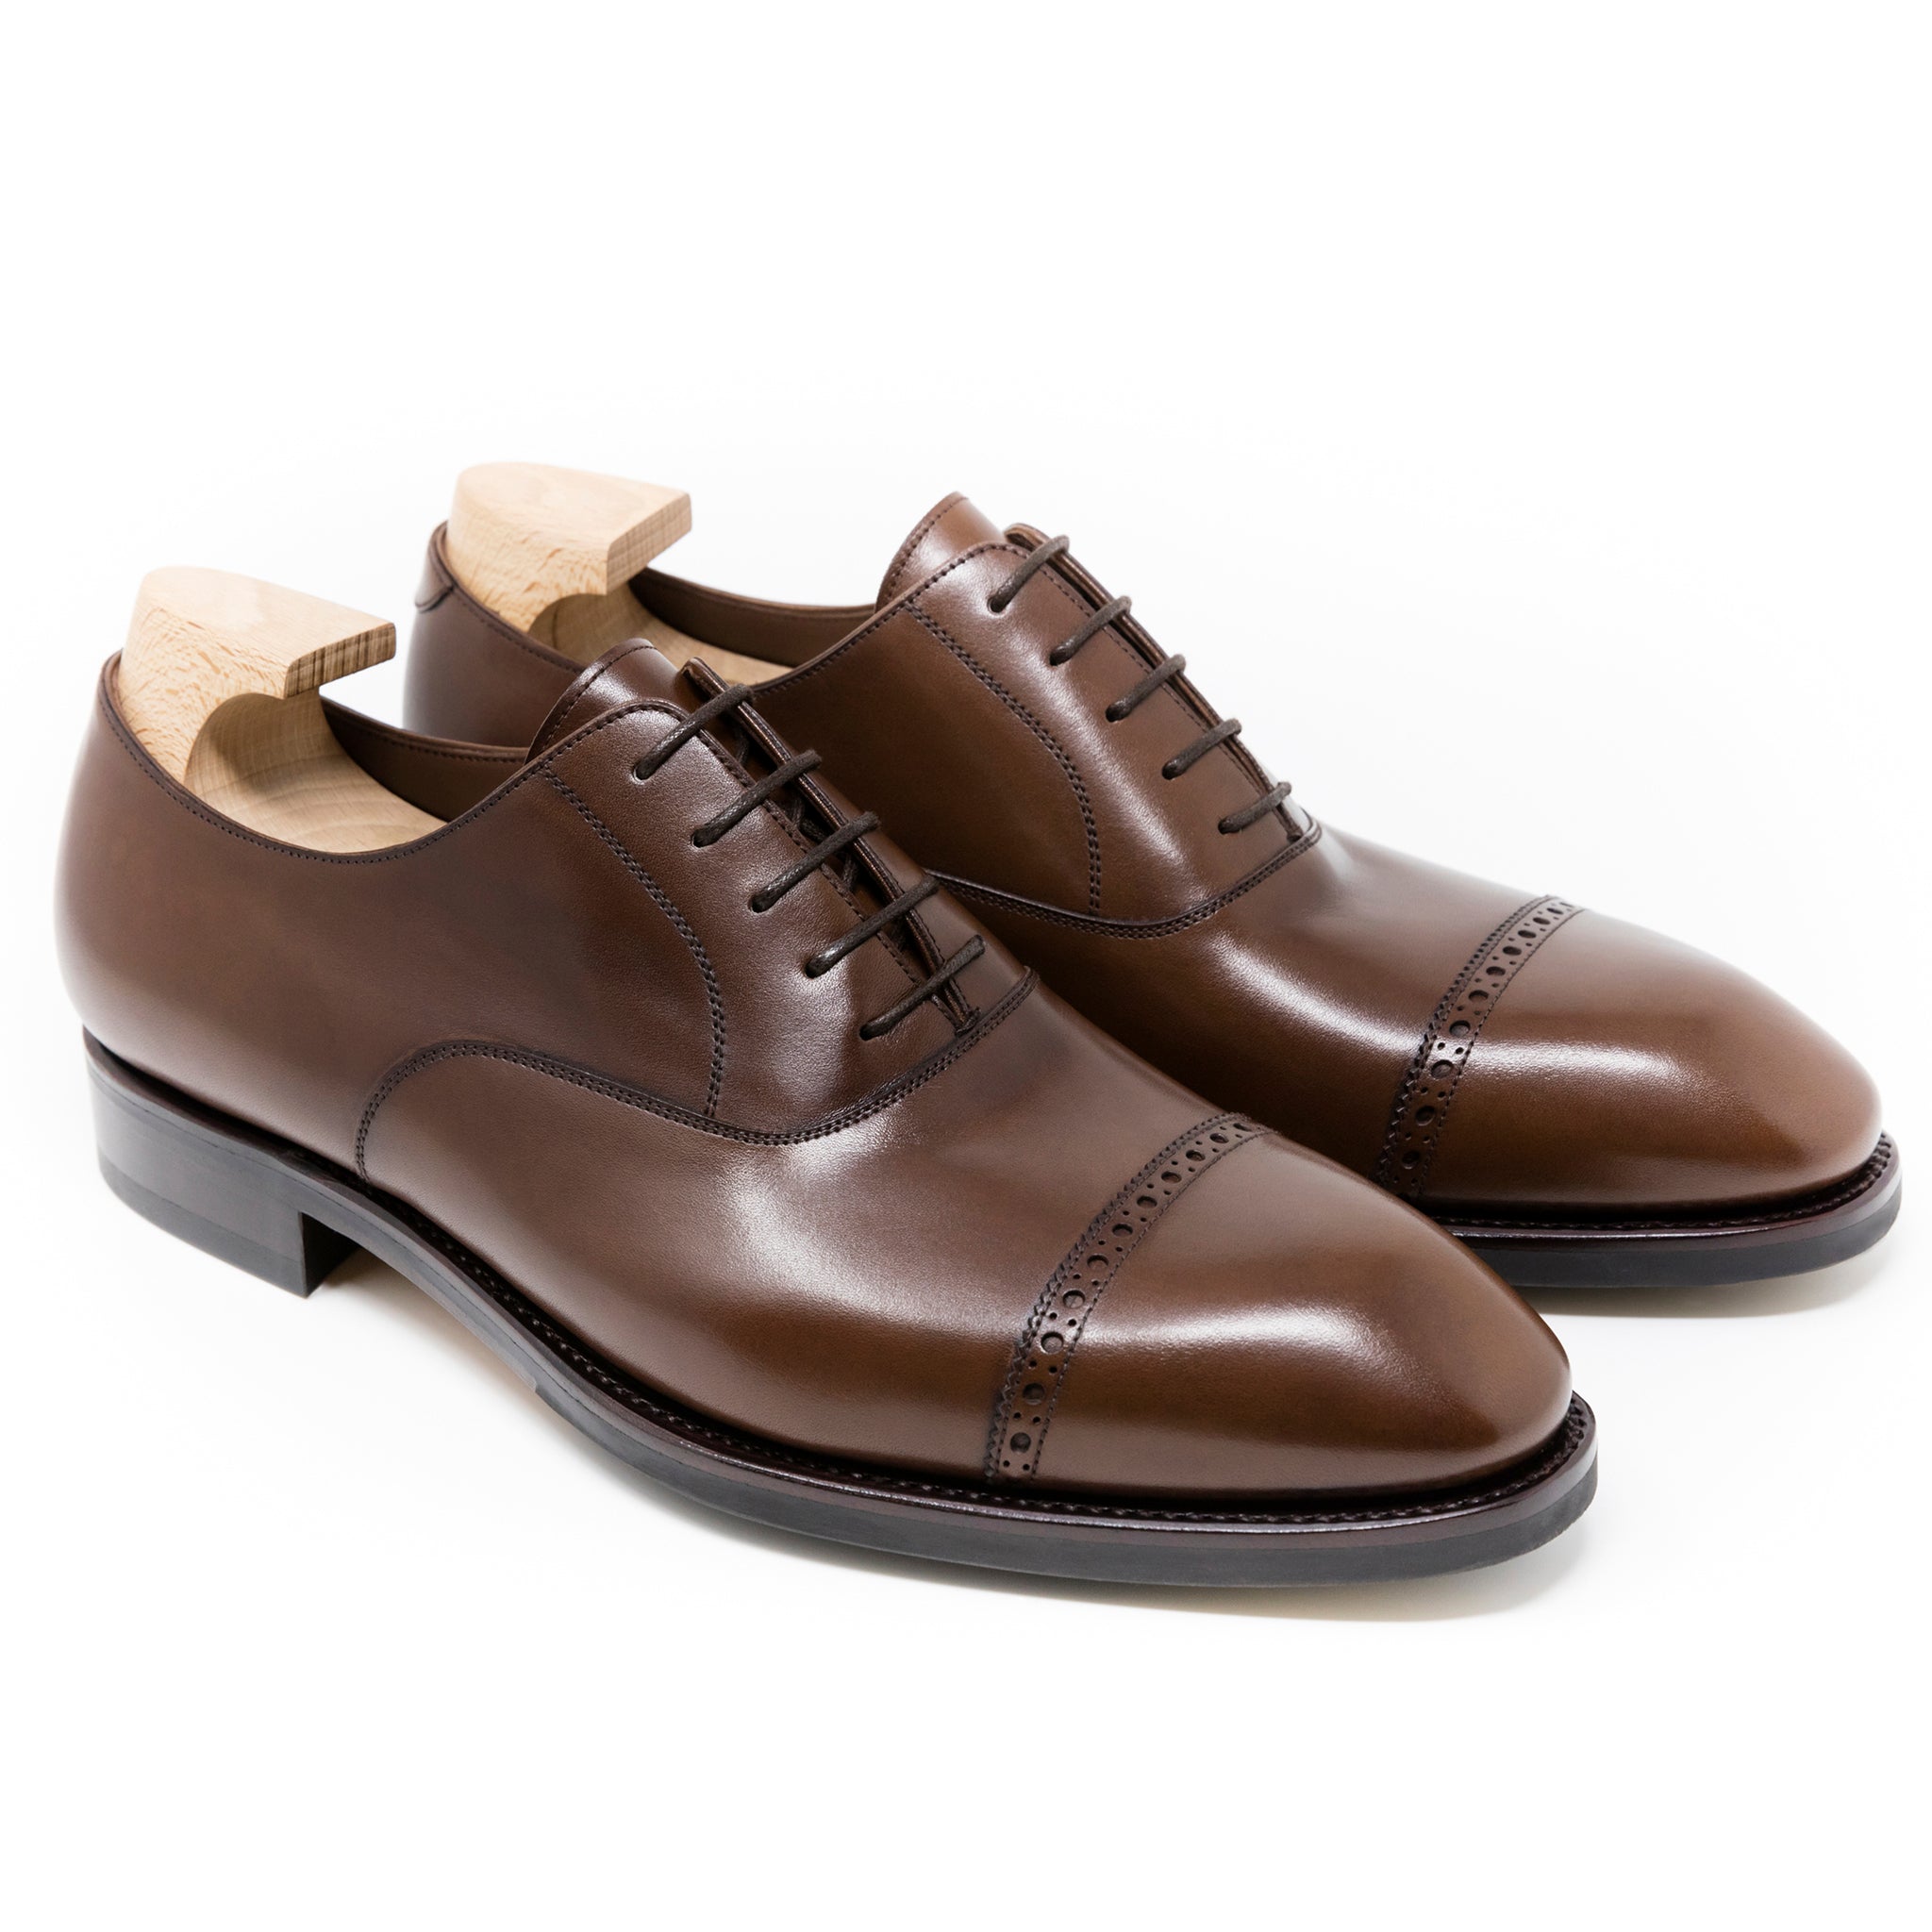 TLB Mallorca Oxford shoes | Men's Oxford shoes | Alan vegano brown ...